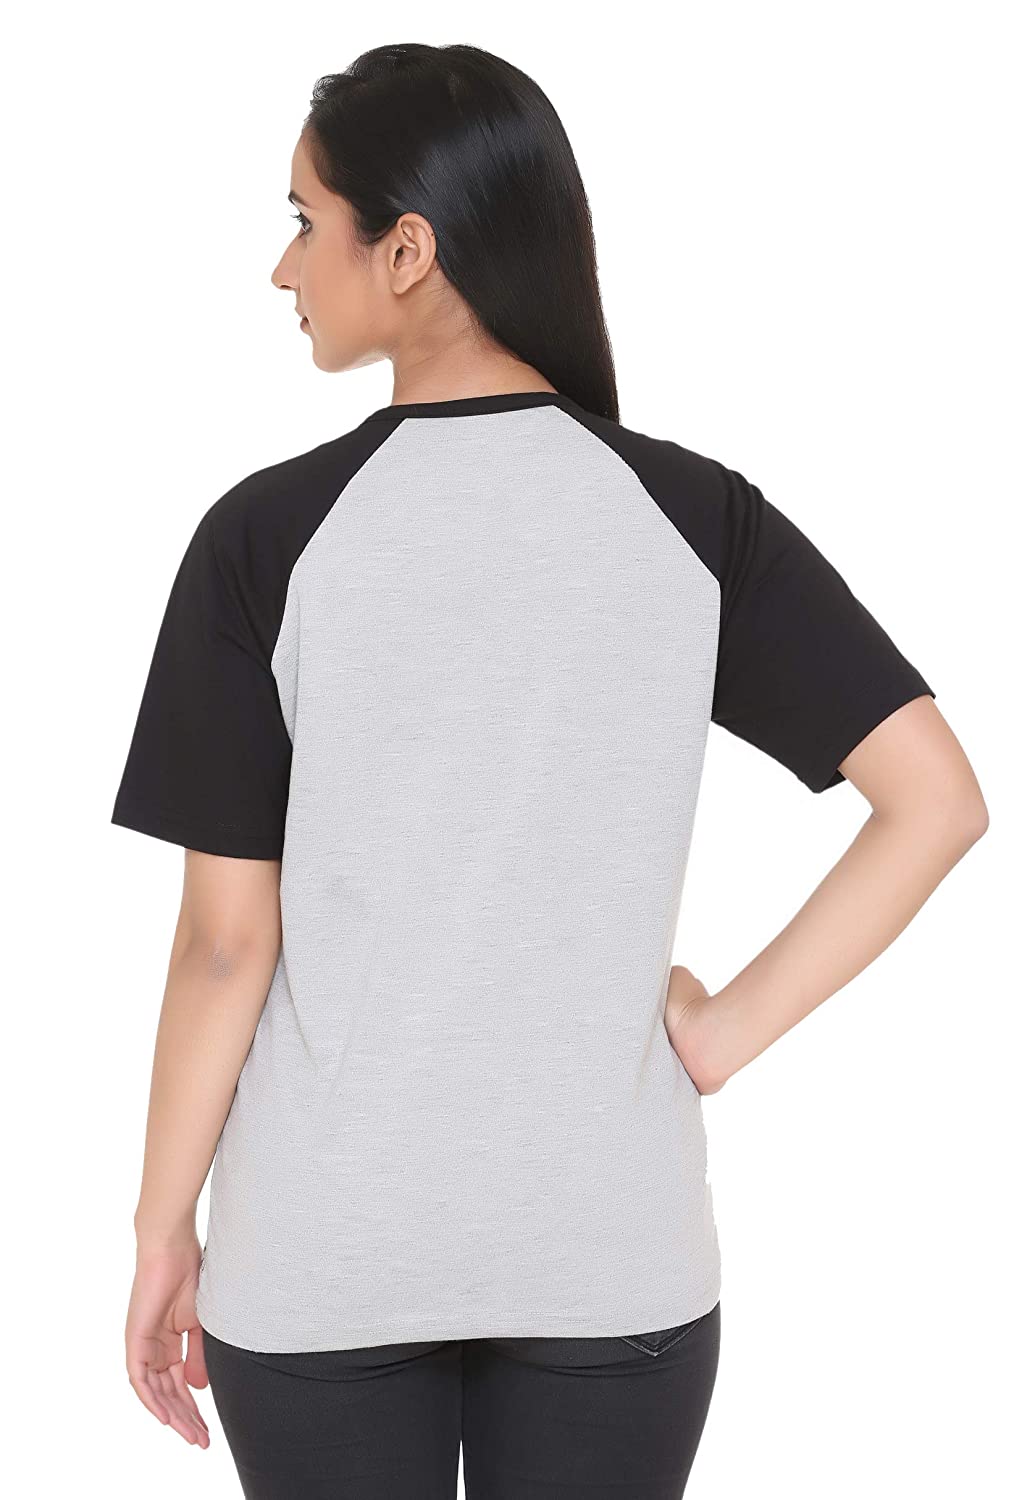 SHAUN Women's Printed Cotton T-Shirt (Pack of 1)